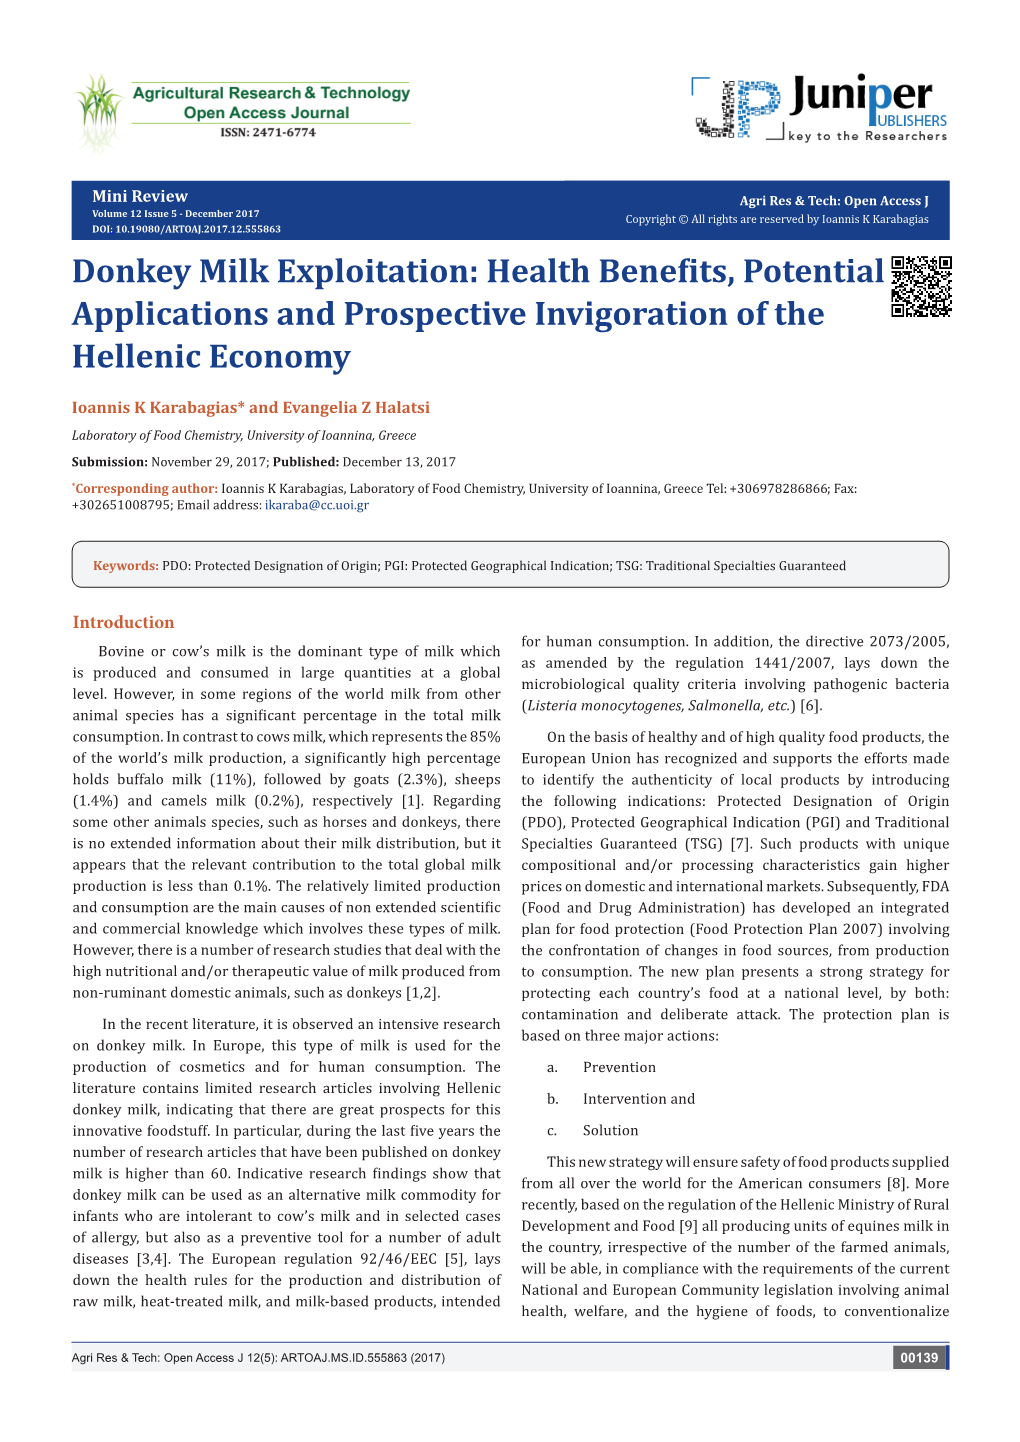 Donkey Milk Exploitation: Health Benefits, Potential Applications and Prospective Invigoration of the Hellenic Economy